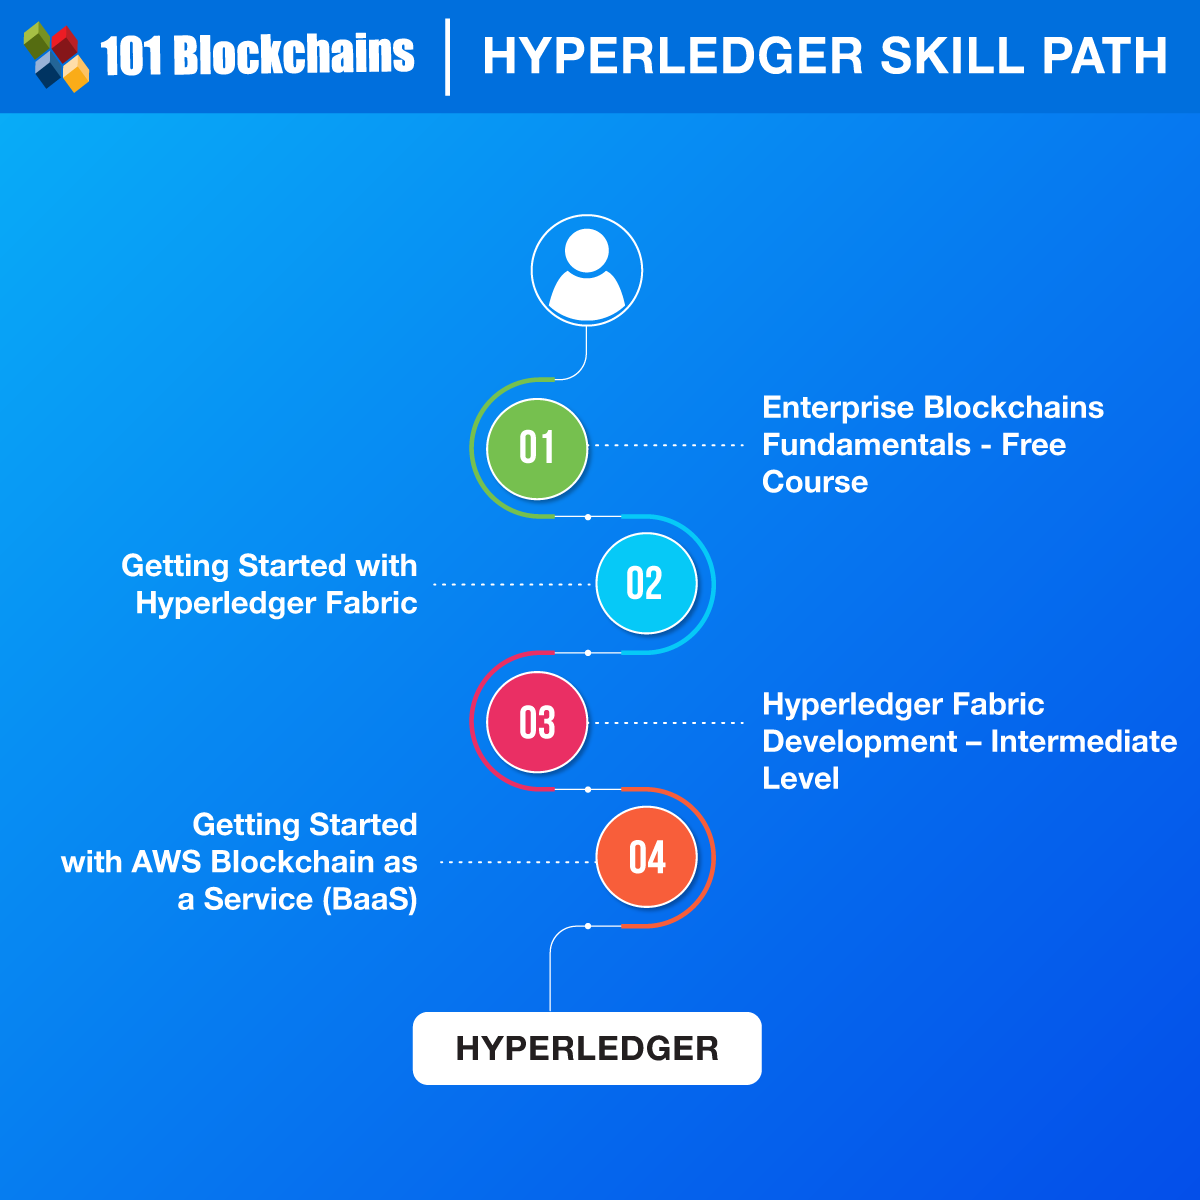 Hyperledger Skill Path